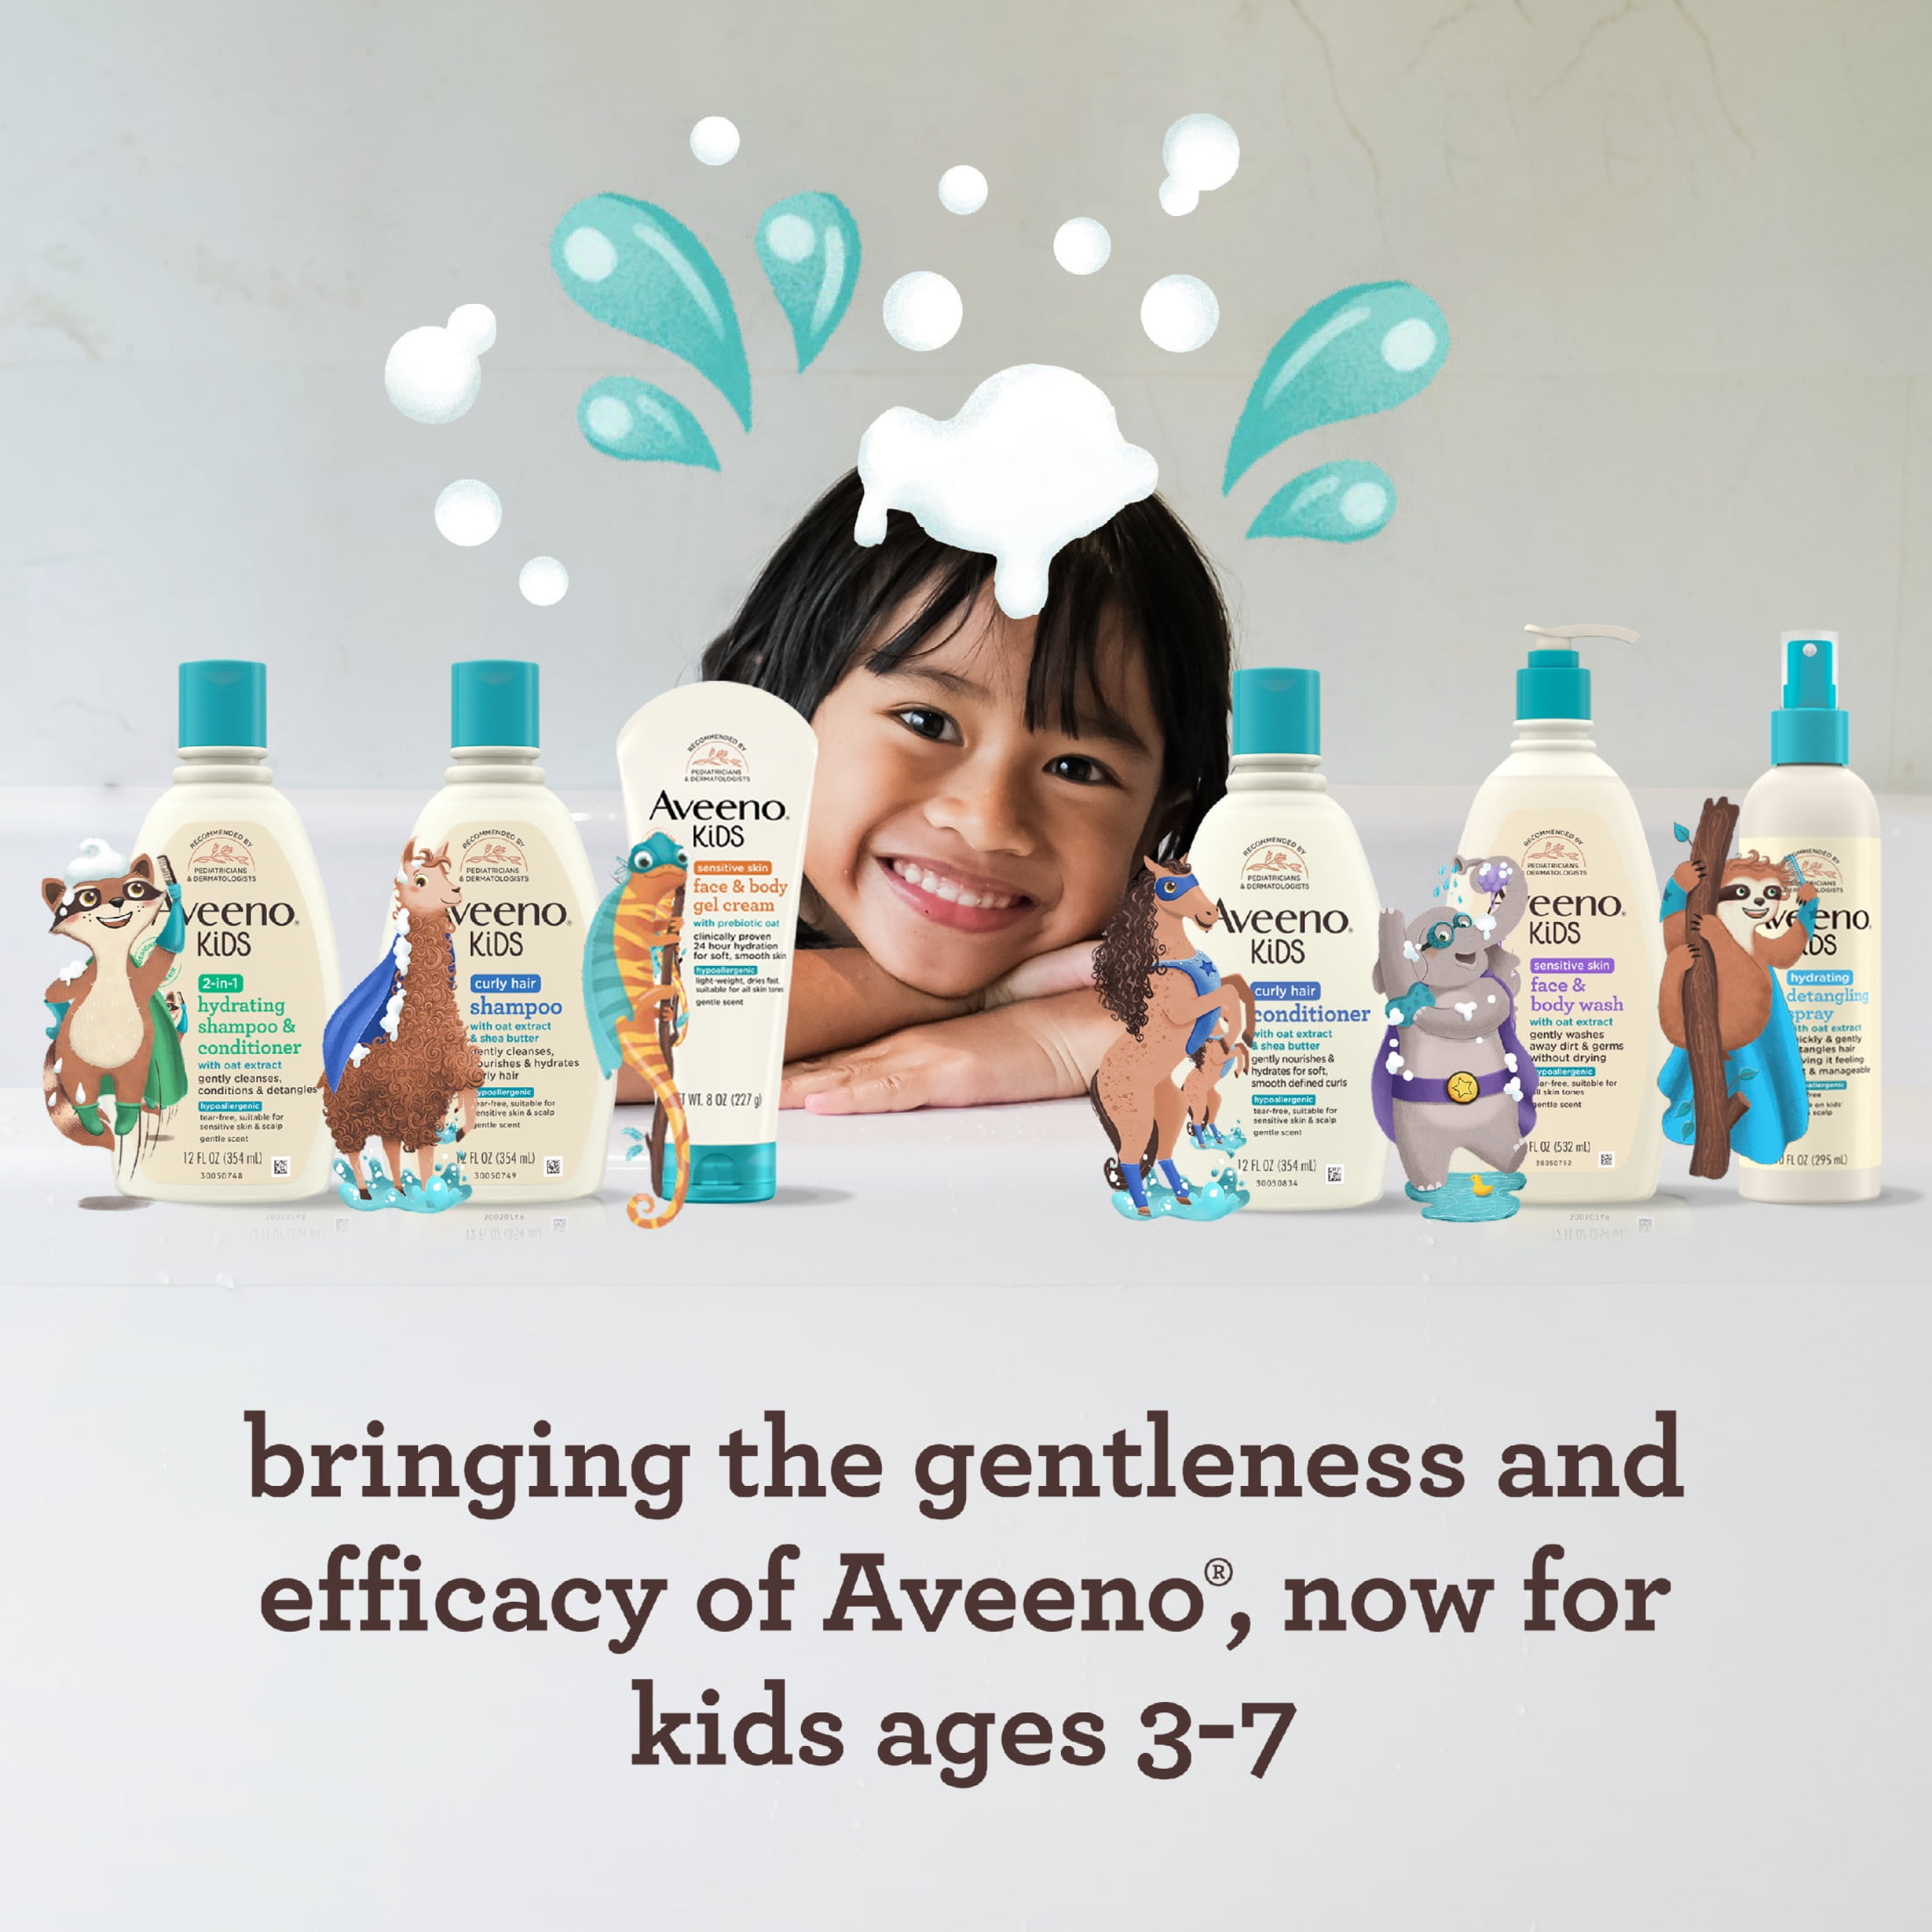 Aveeno Kids Sensitive Skin Face & Body Gel Cream, Clinically Proven 24 Hour  Hydration, Lightweight - 8oz : Target